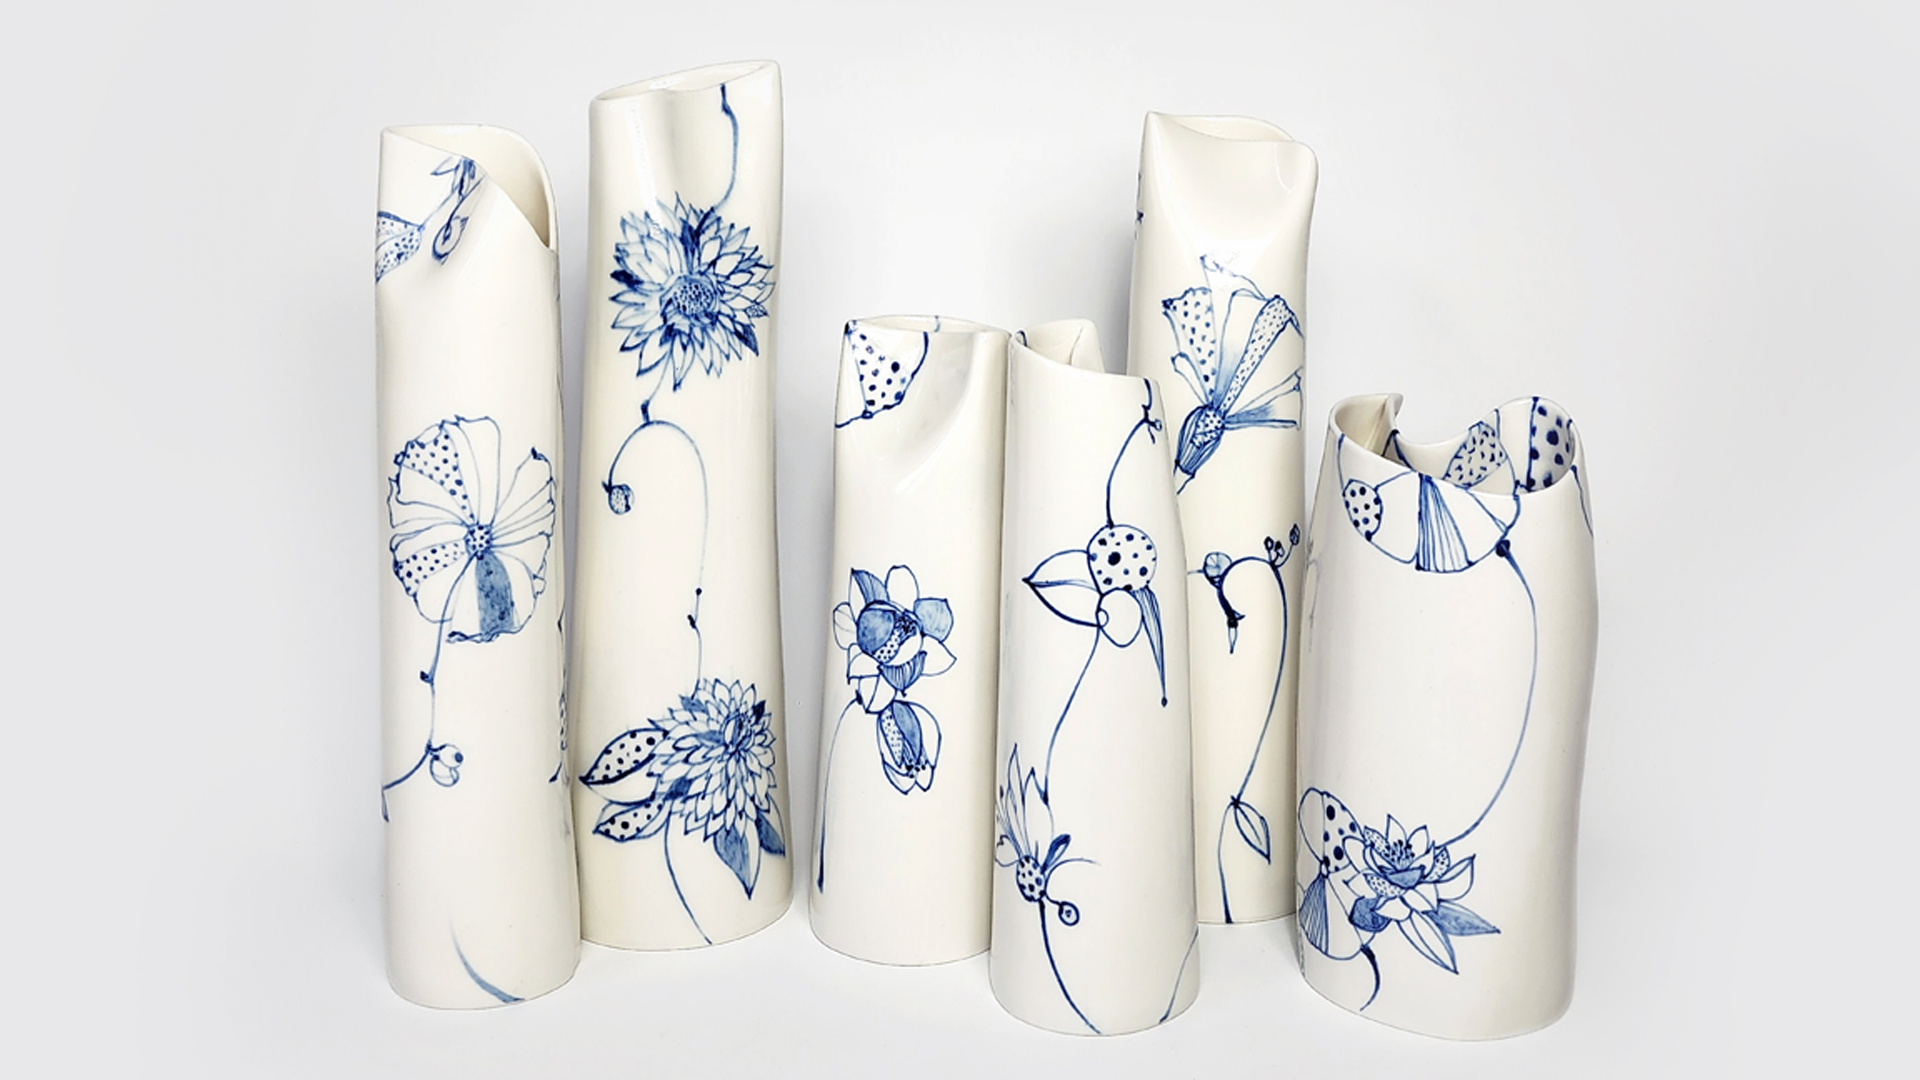 Keiko Matsui Ceramics | Artist, Ceramicist, and Potter